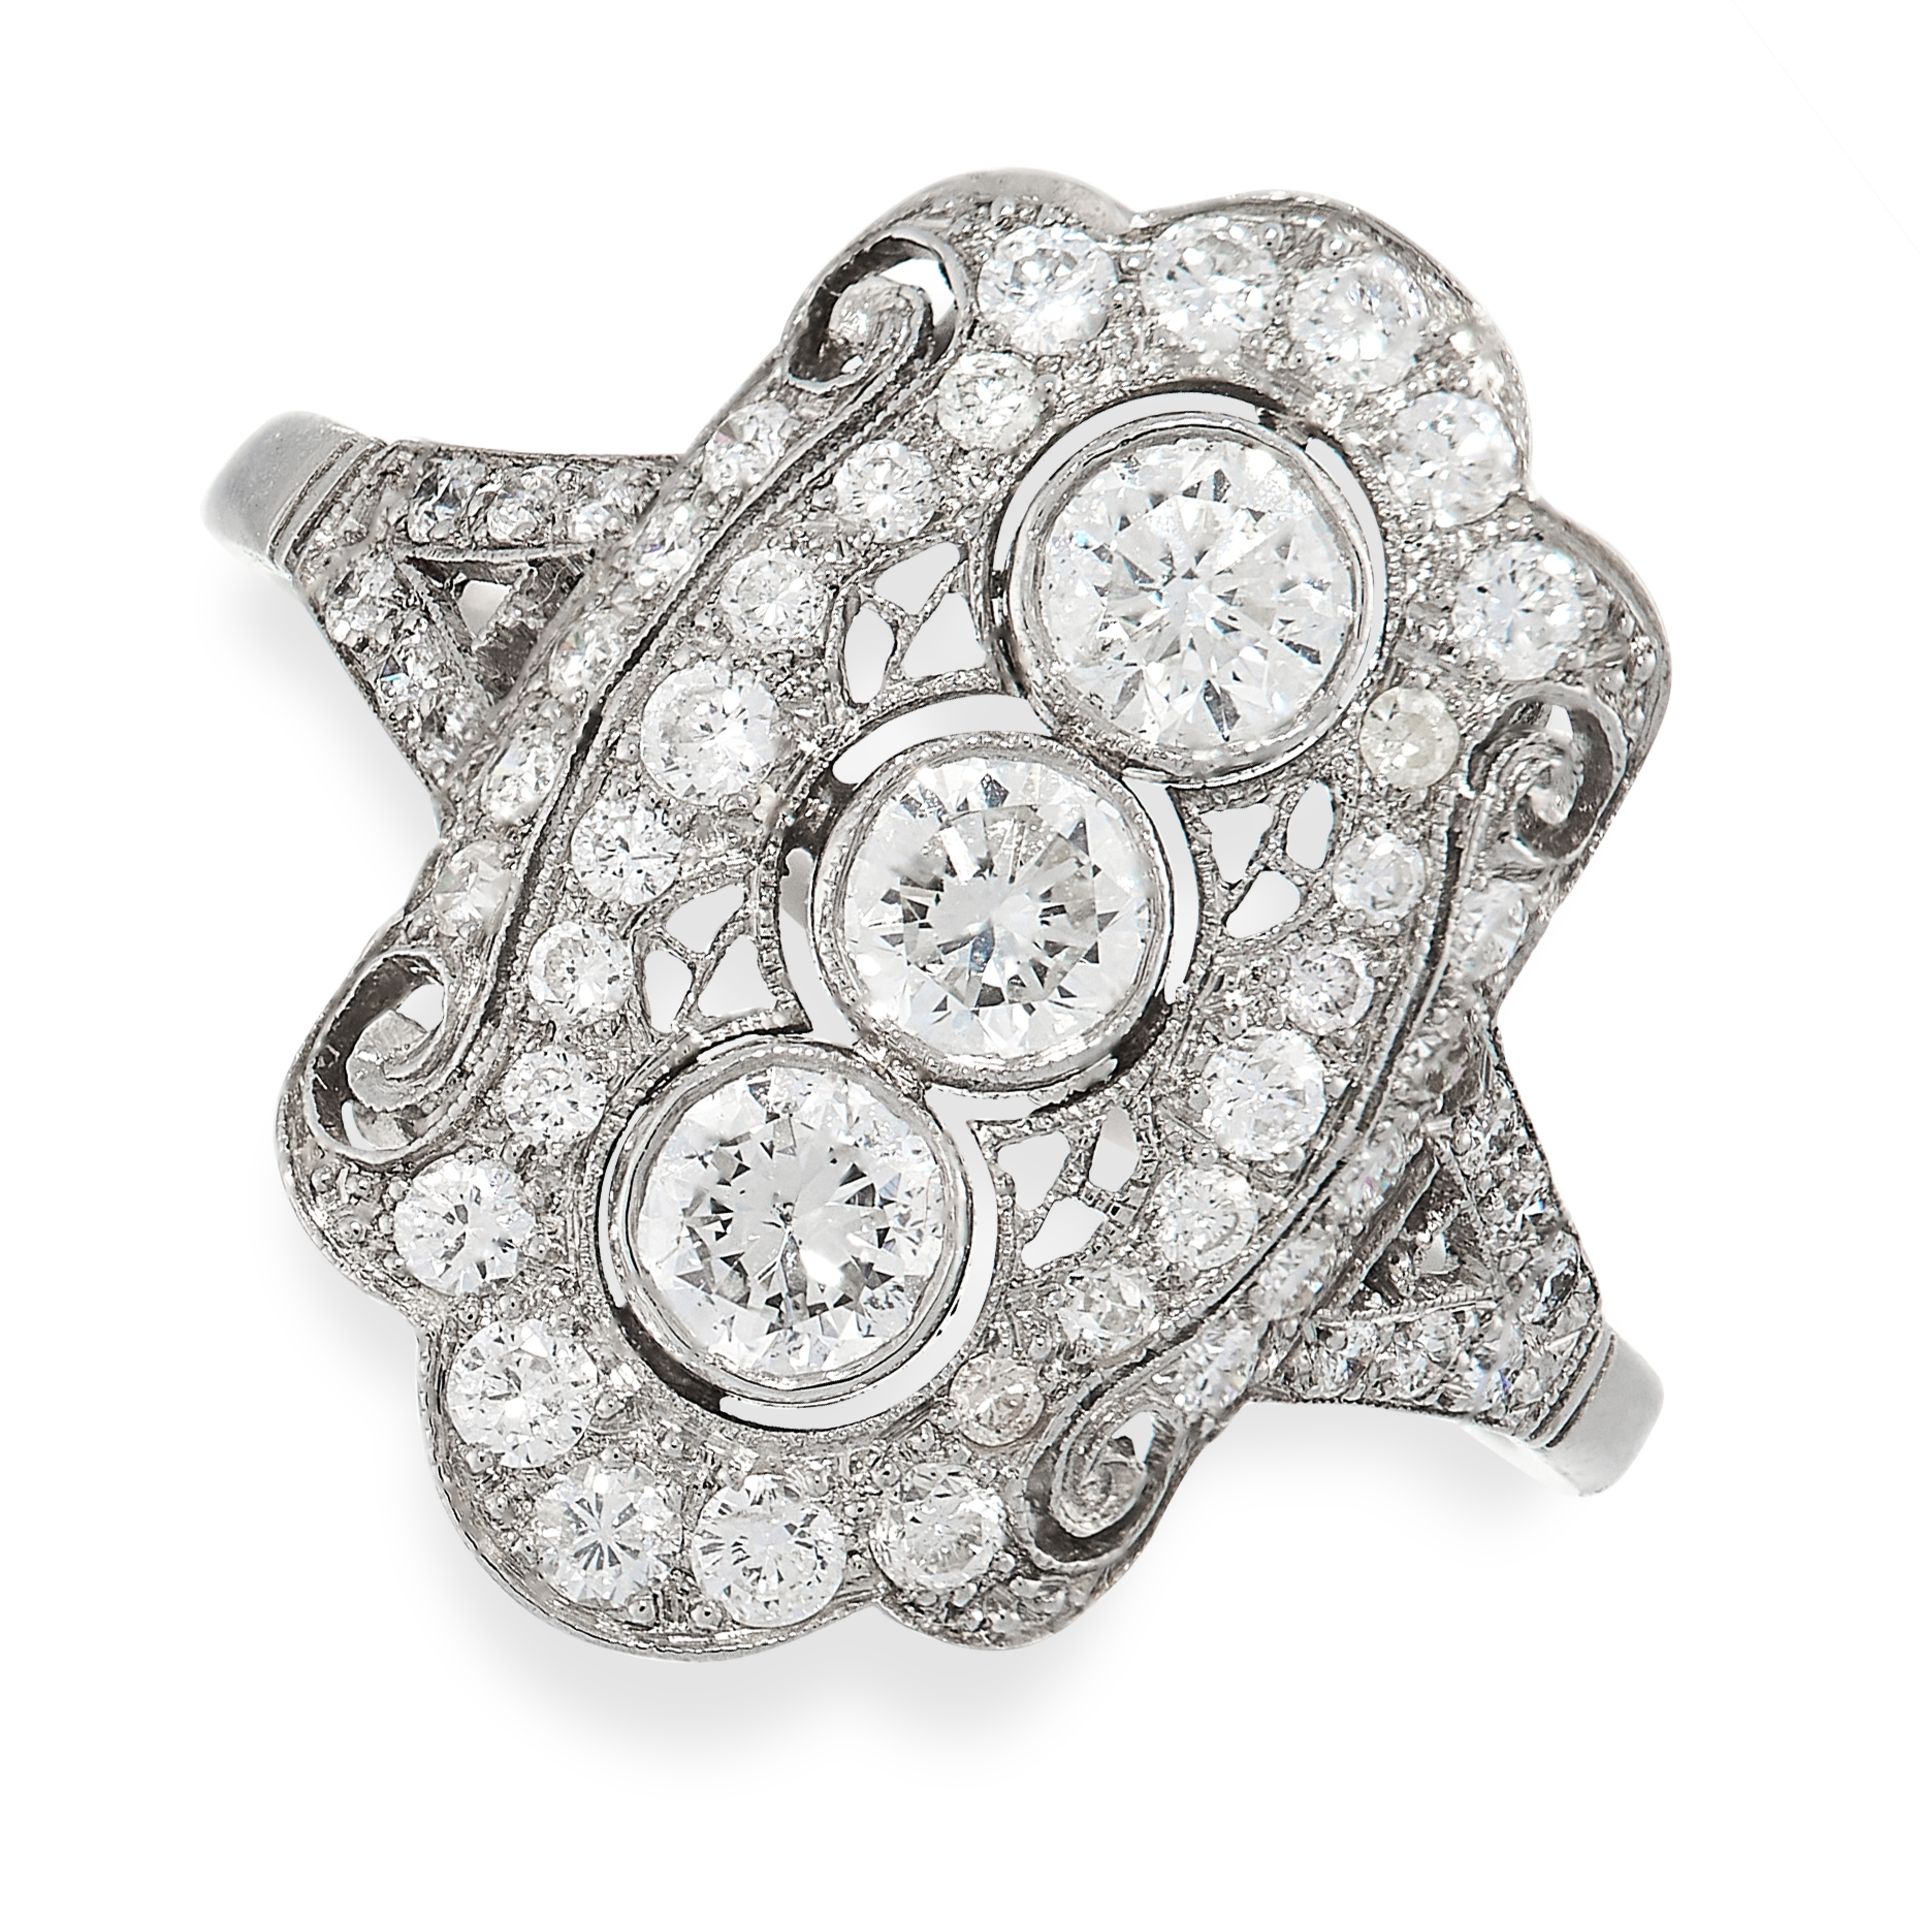 ART DECO DIAMOND RING, EARLY 20TH CENTURY in platinum, comprising of three principle diamonds, in an